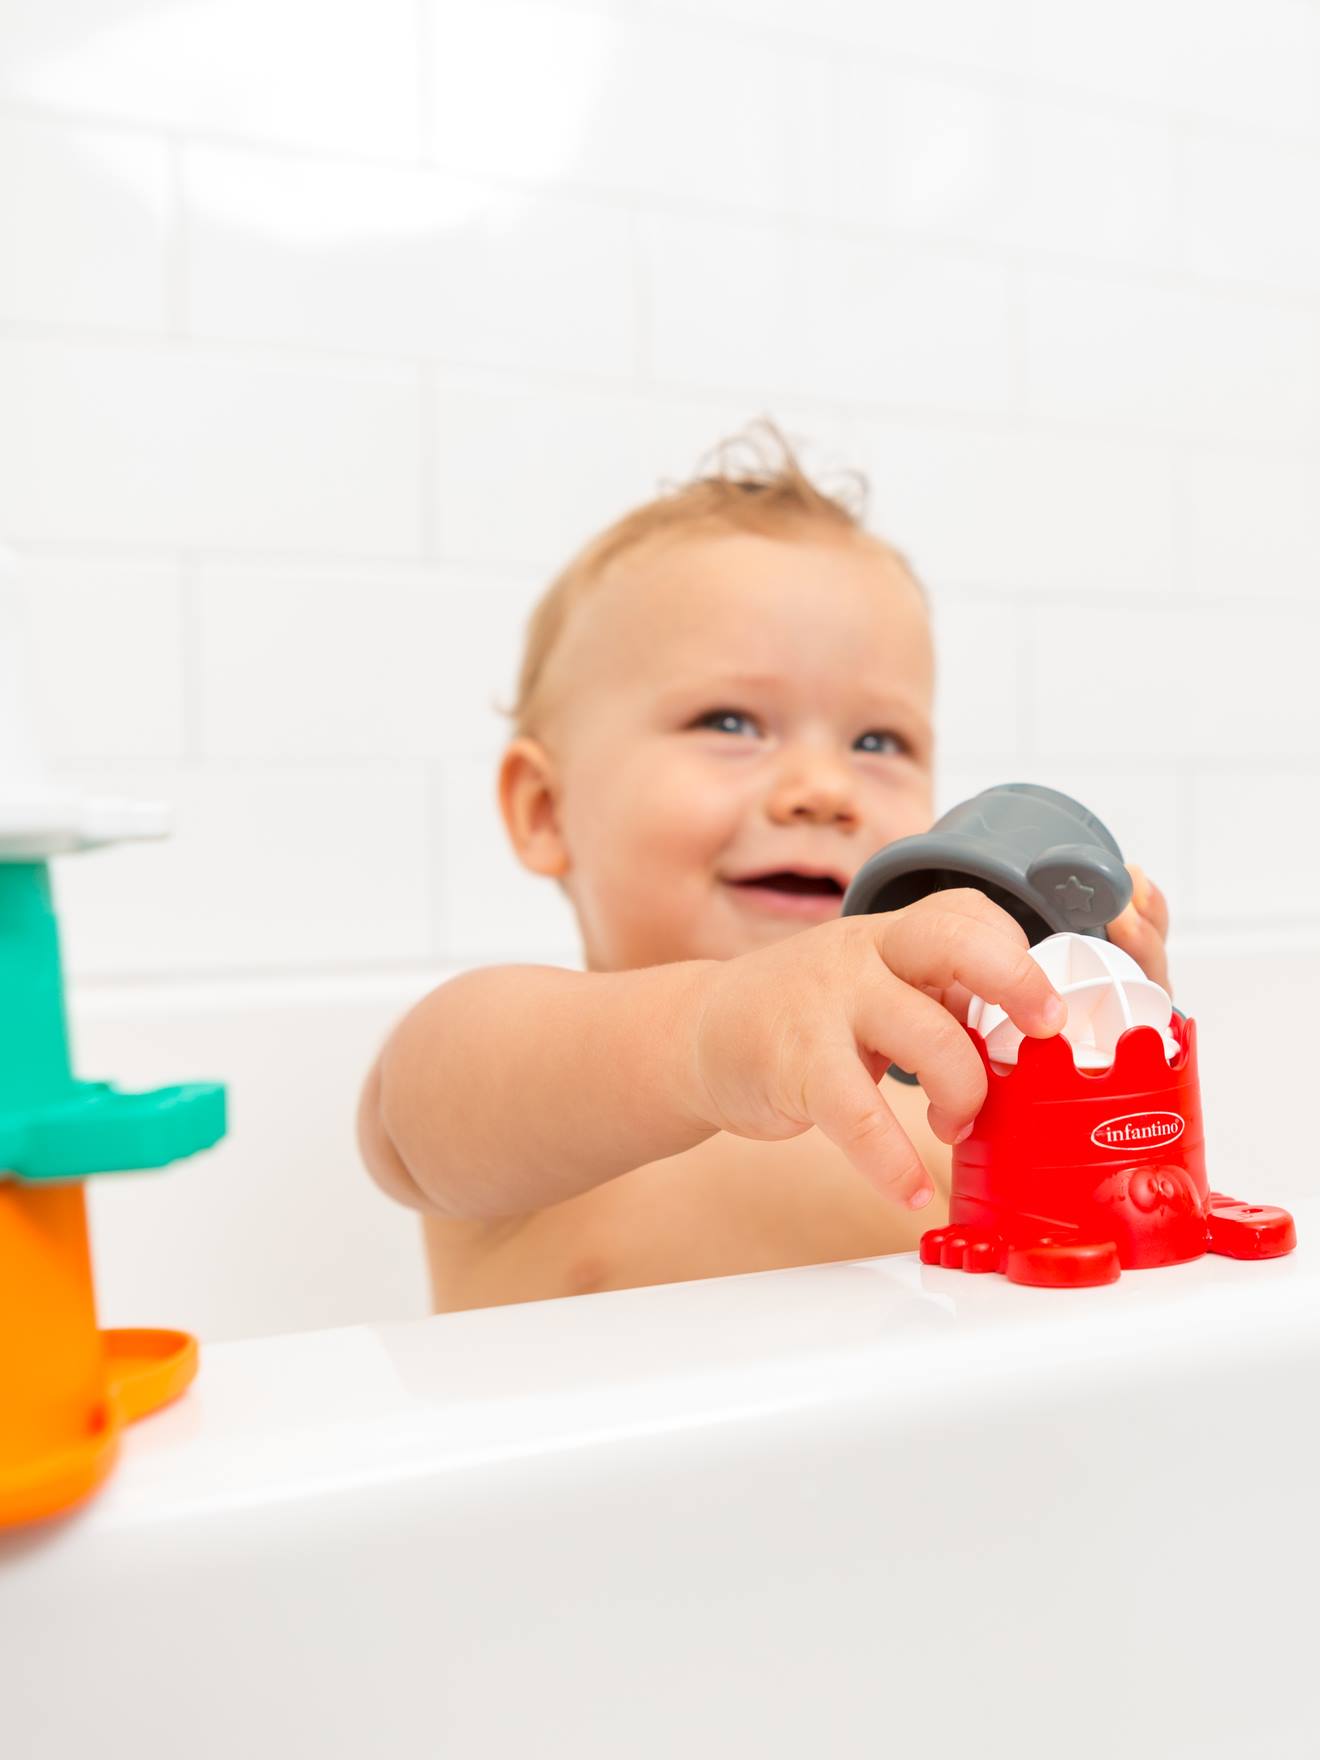 Coffret de bain 17 jouets de Infantino, Jouets de bain : Aubert